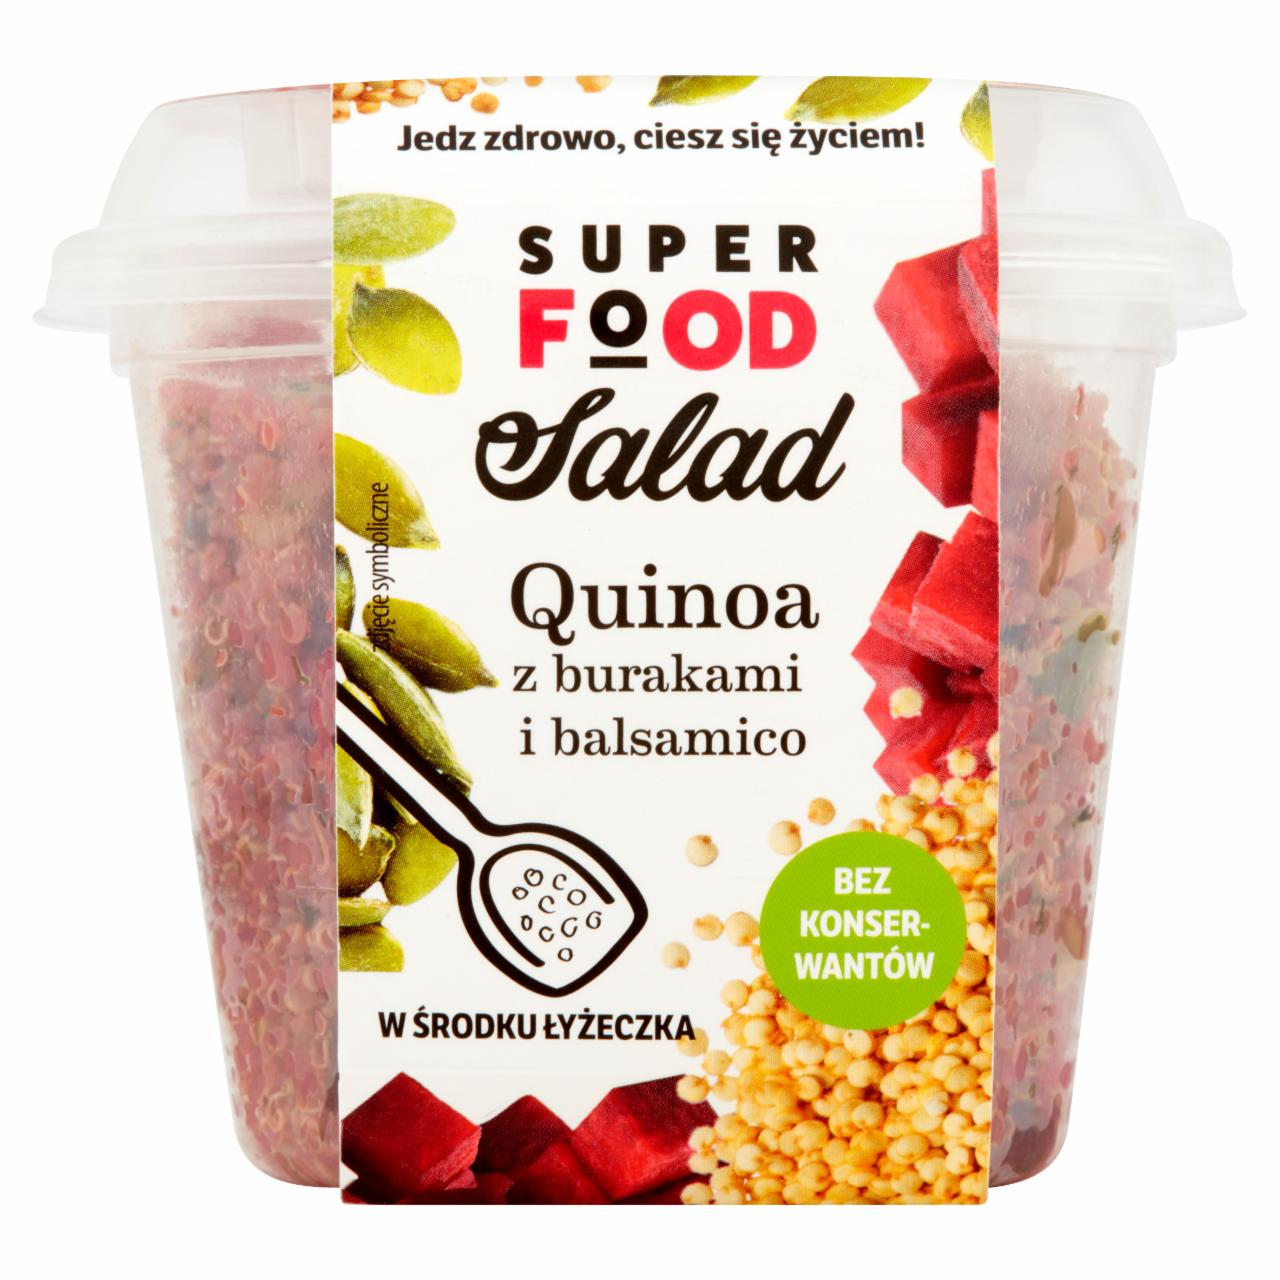 Zdjęcia - Super Food Salad Quinoa z burakami i balsamico 200 g